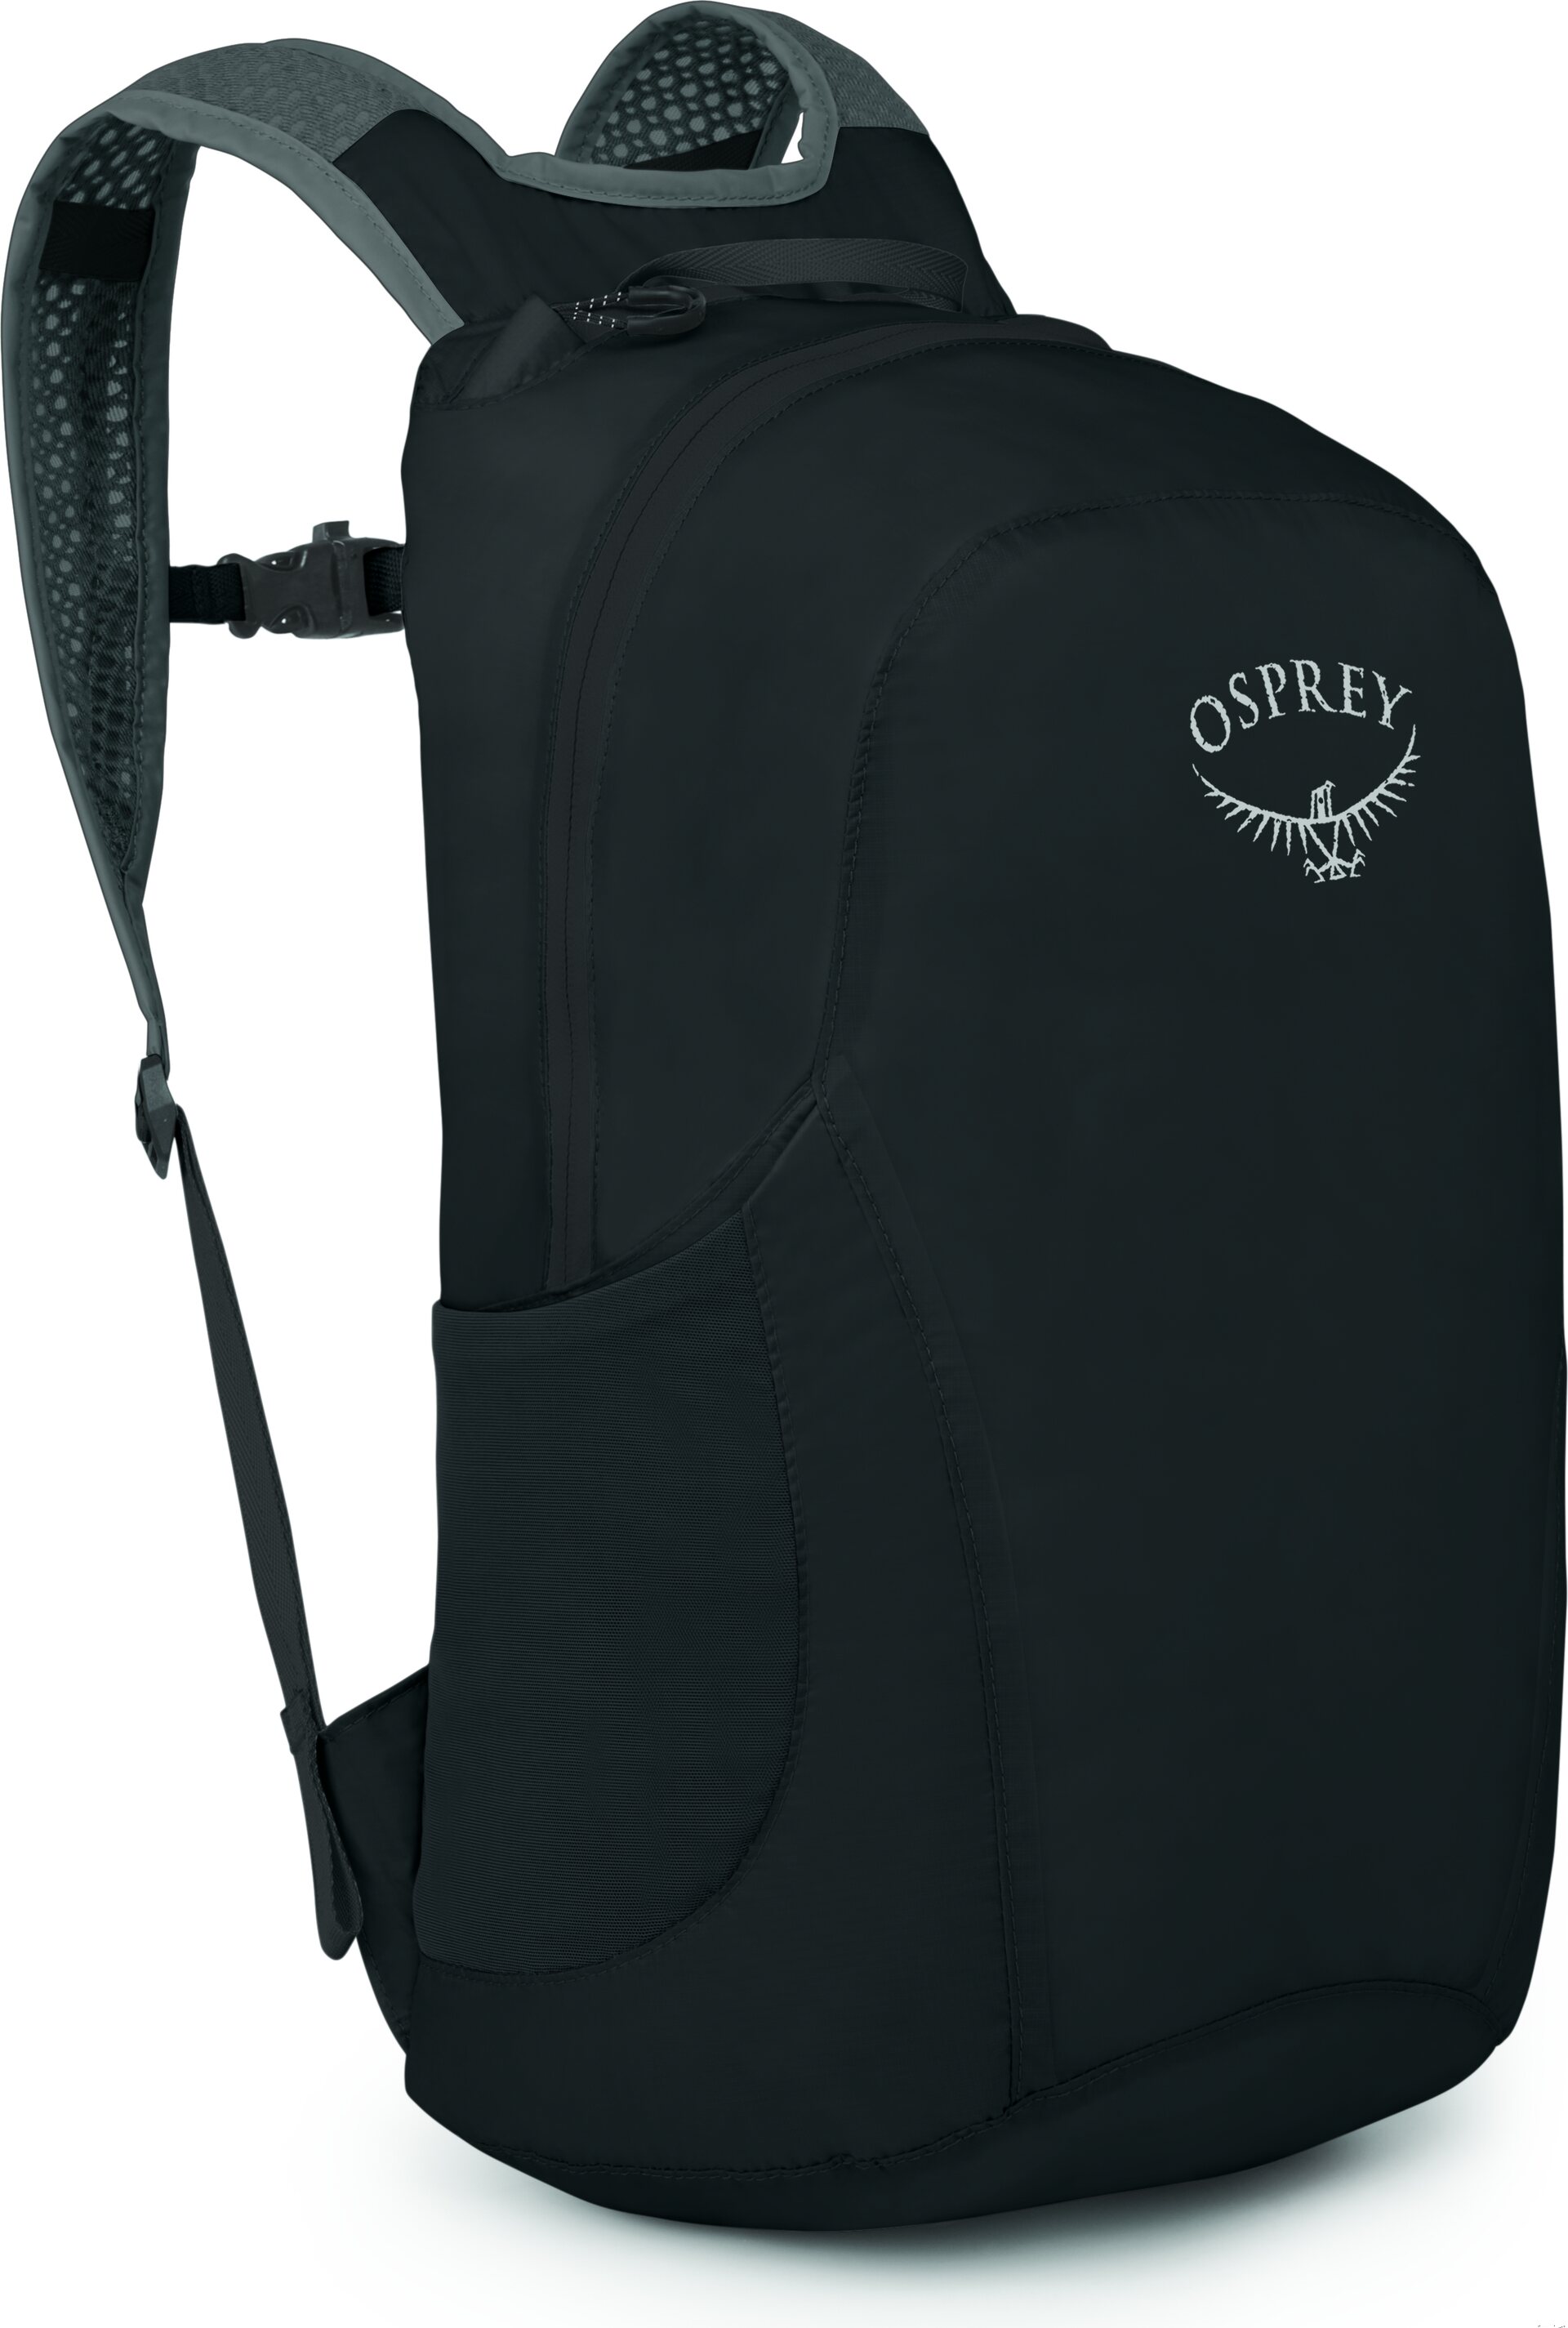 Osprey Ultralight Stuff Pack | Packable backpacks | Varuste.net English